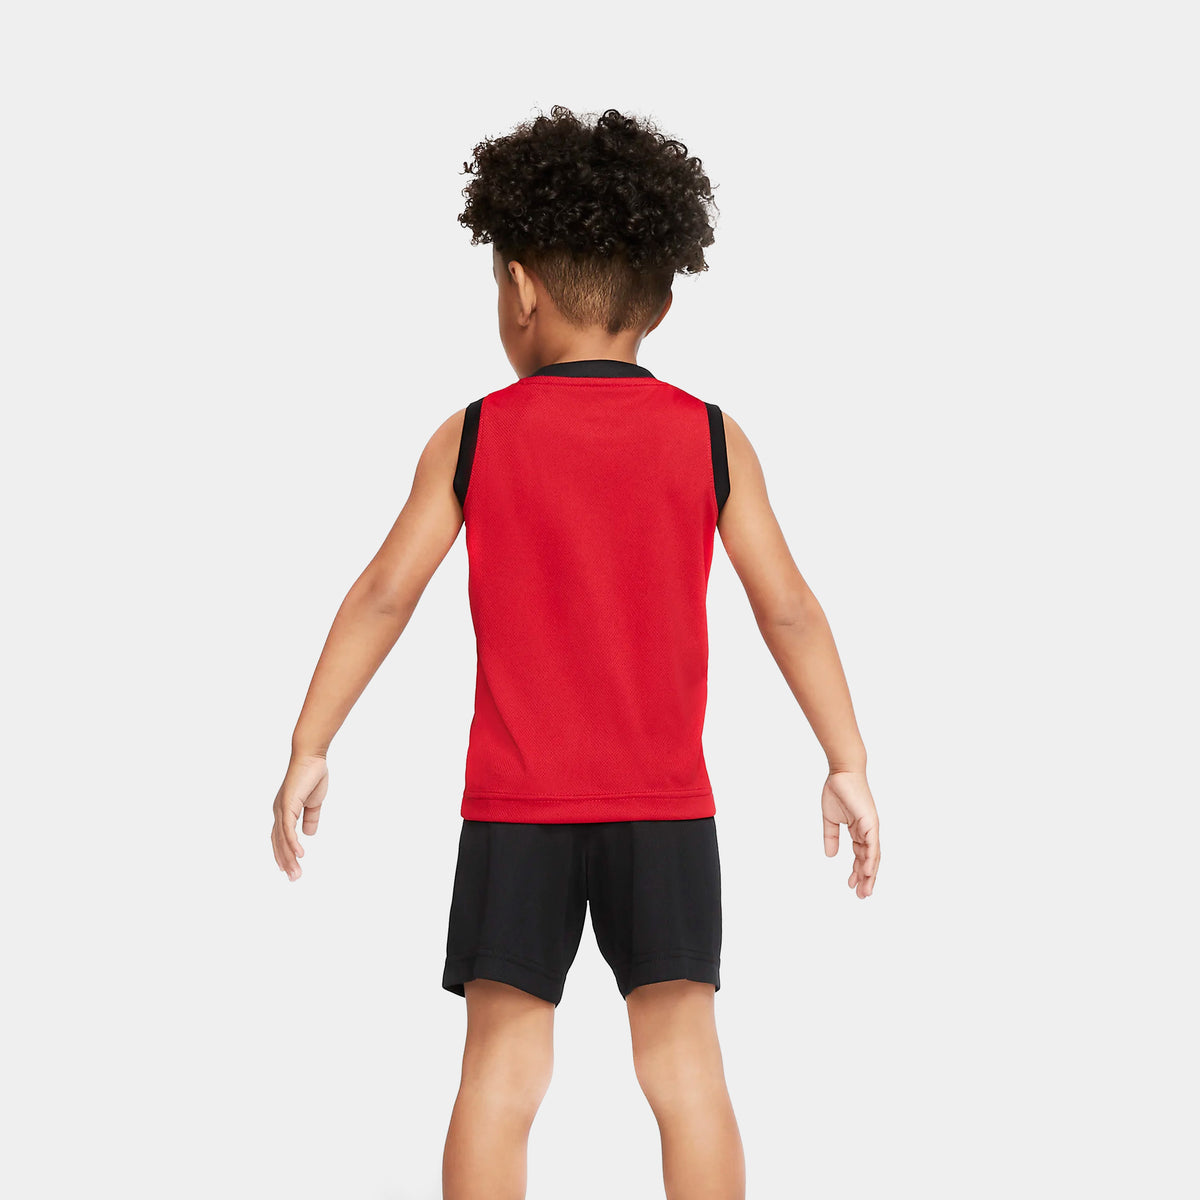 Jordan BR Muscle Tank and Shorts Set Toddler Set Black Red 757559-023 ...